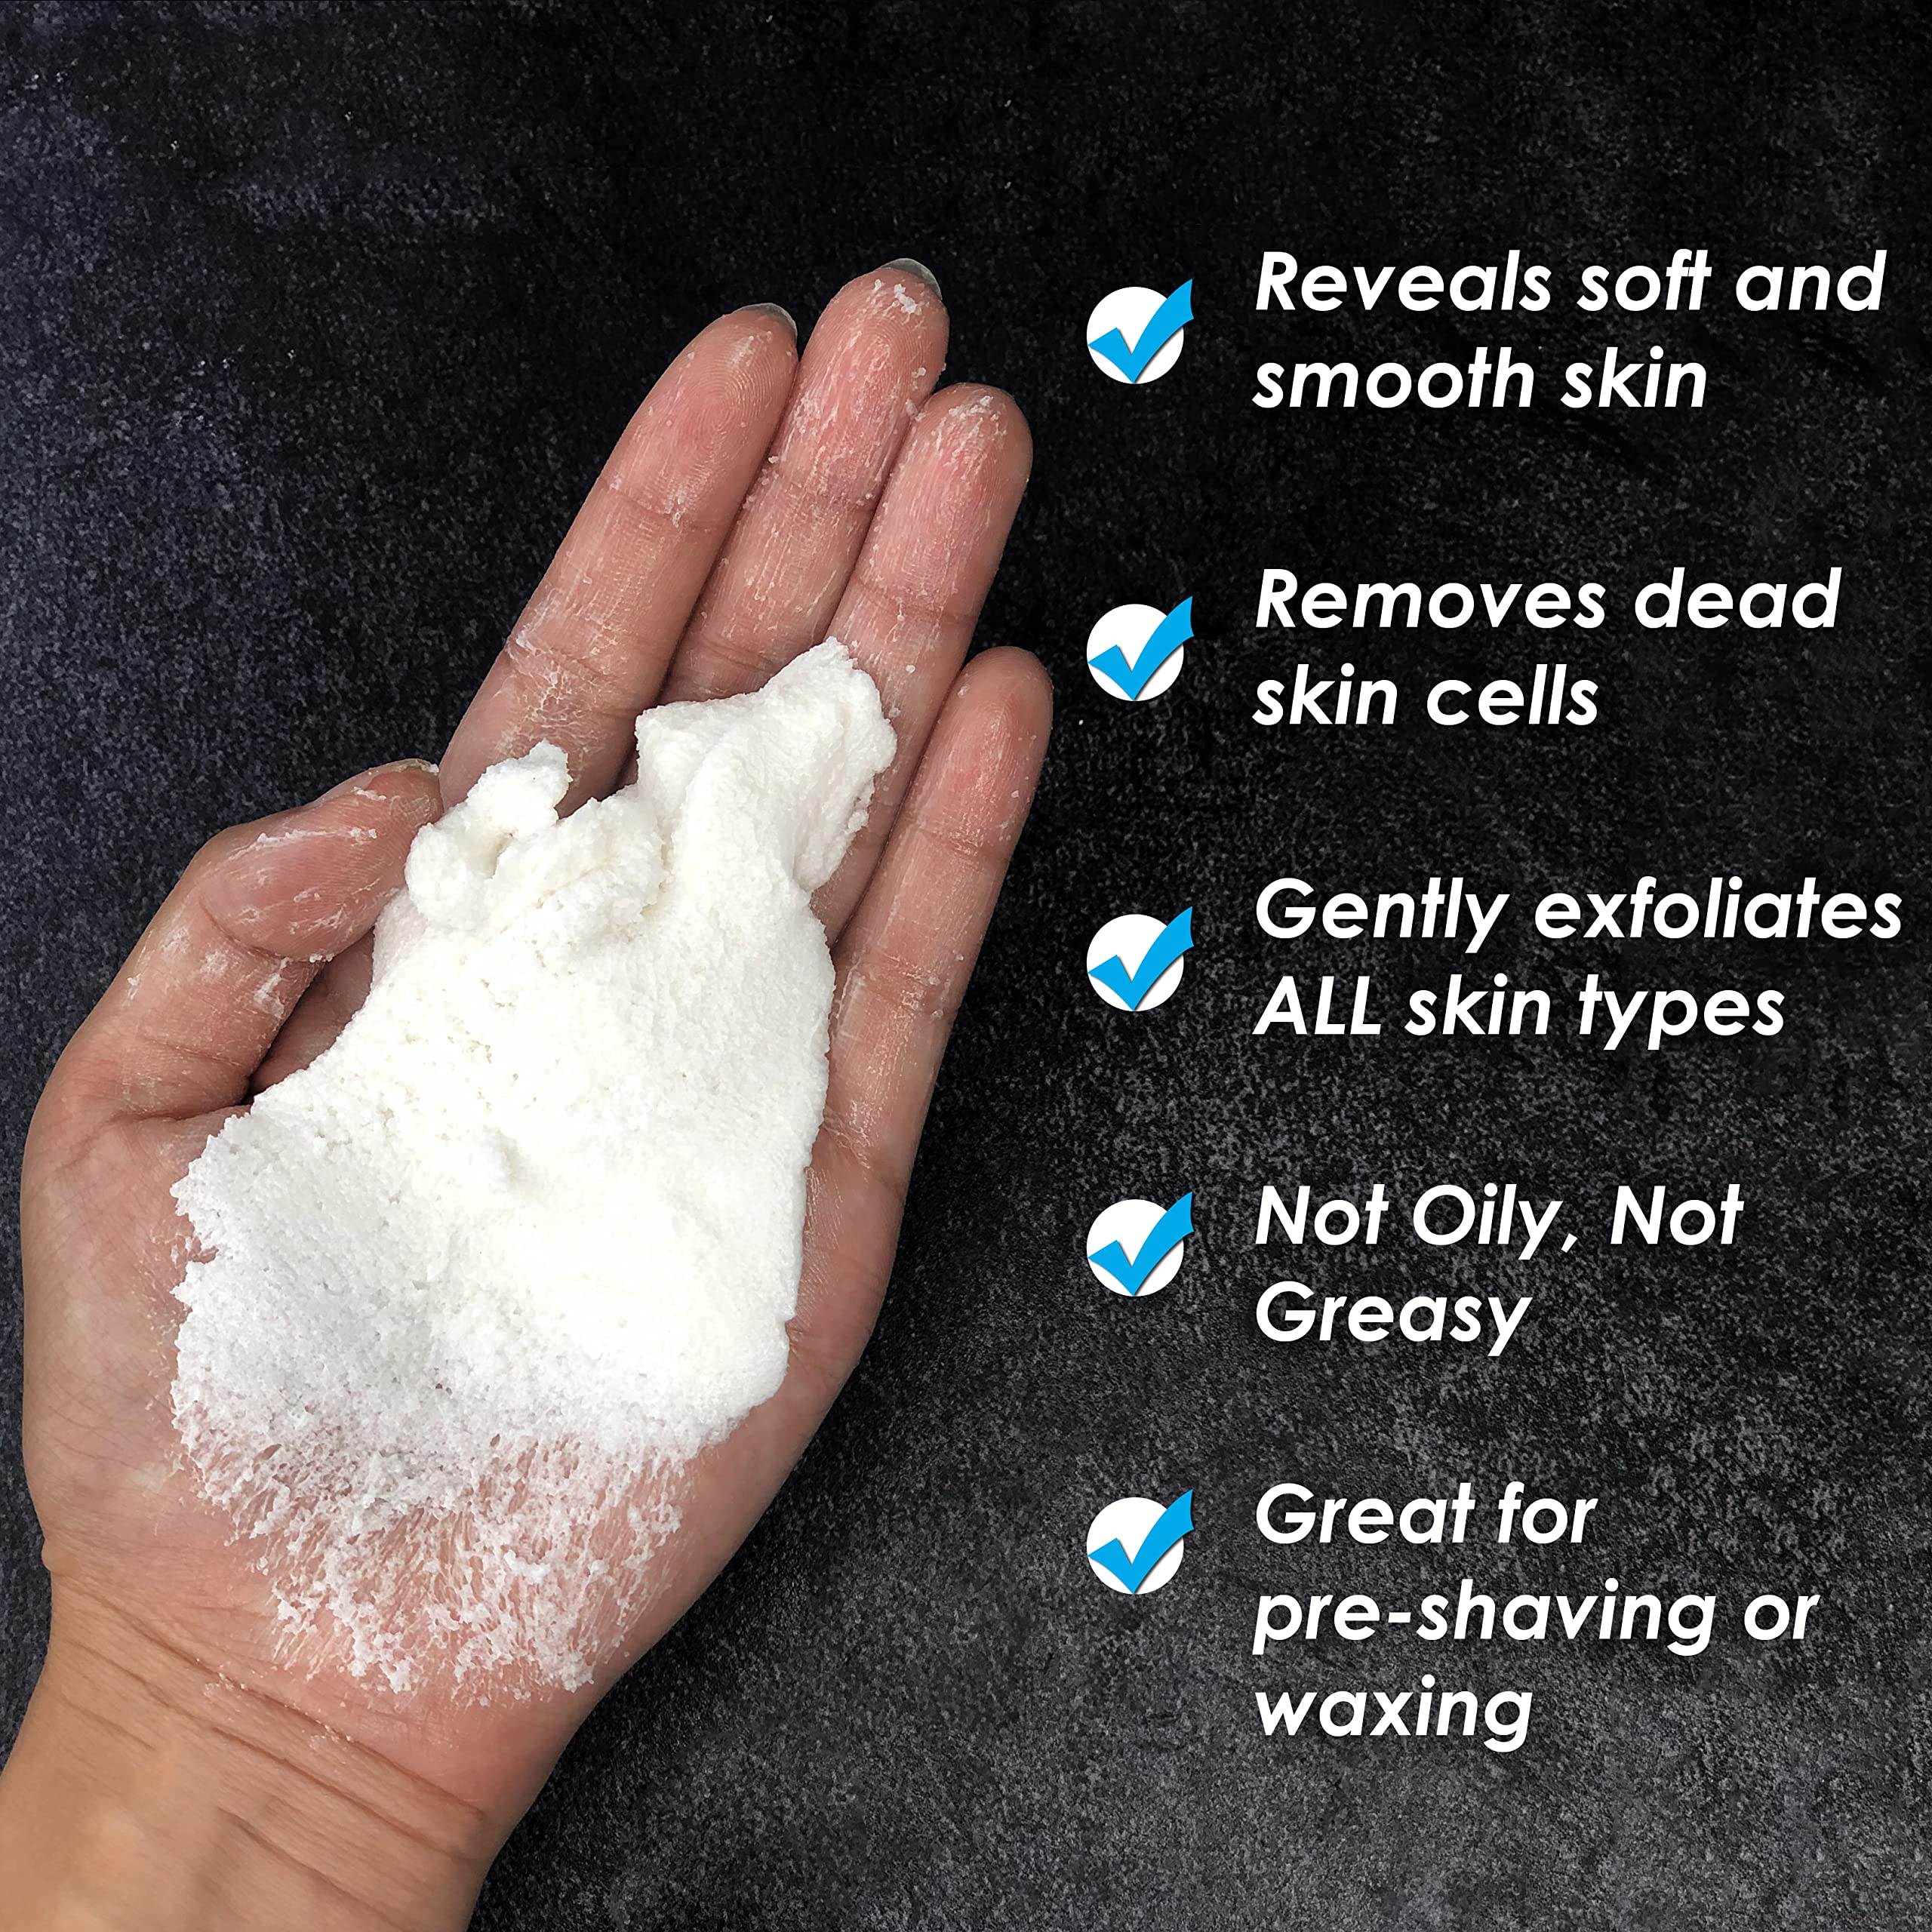 Primal Elements Sugar Scrub, Exfoliating Sugar Whip, Body Cleanser and Moisturizer - Aloha, 10 oz Package